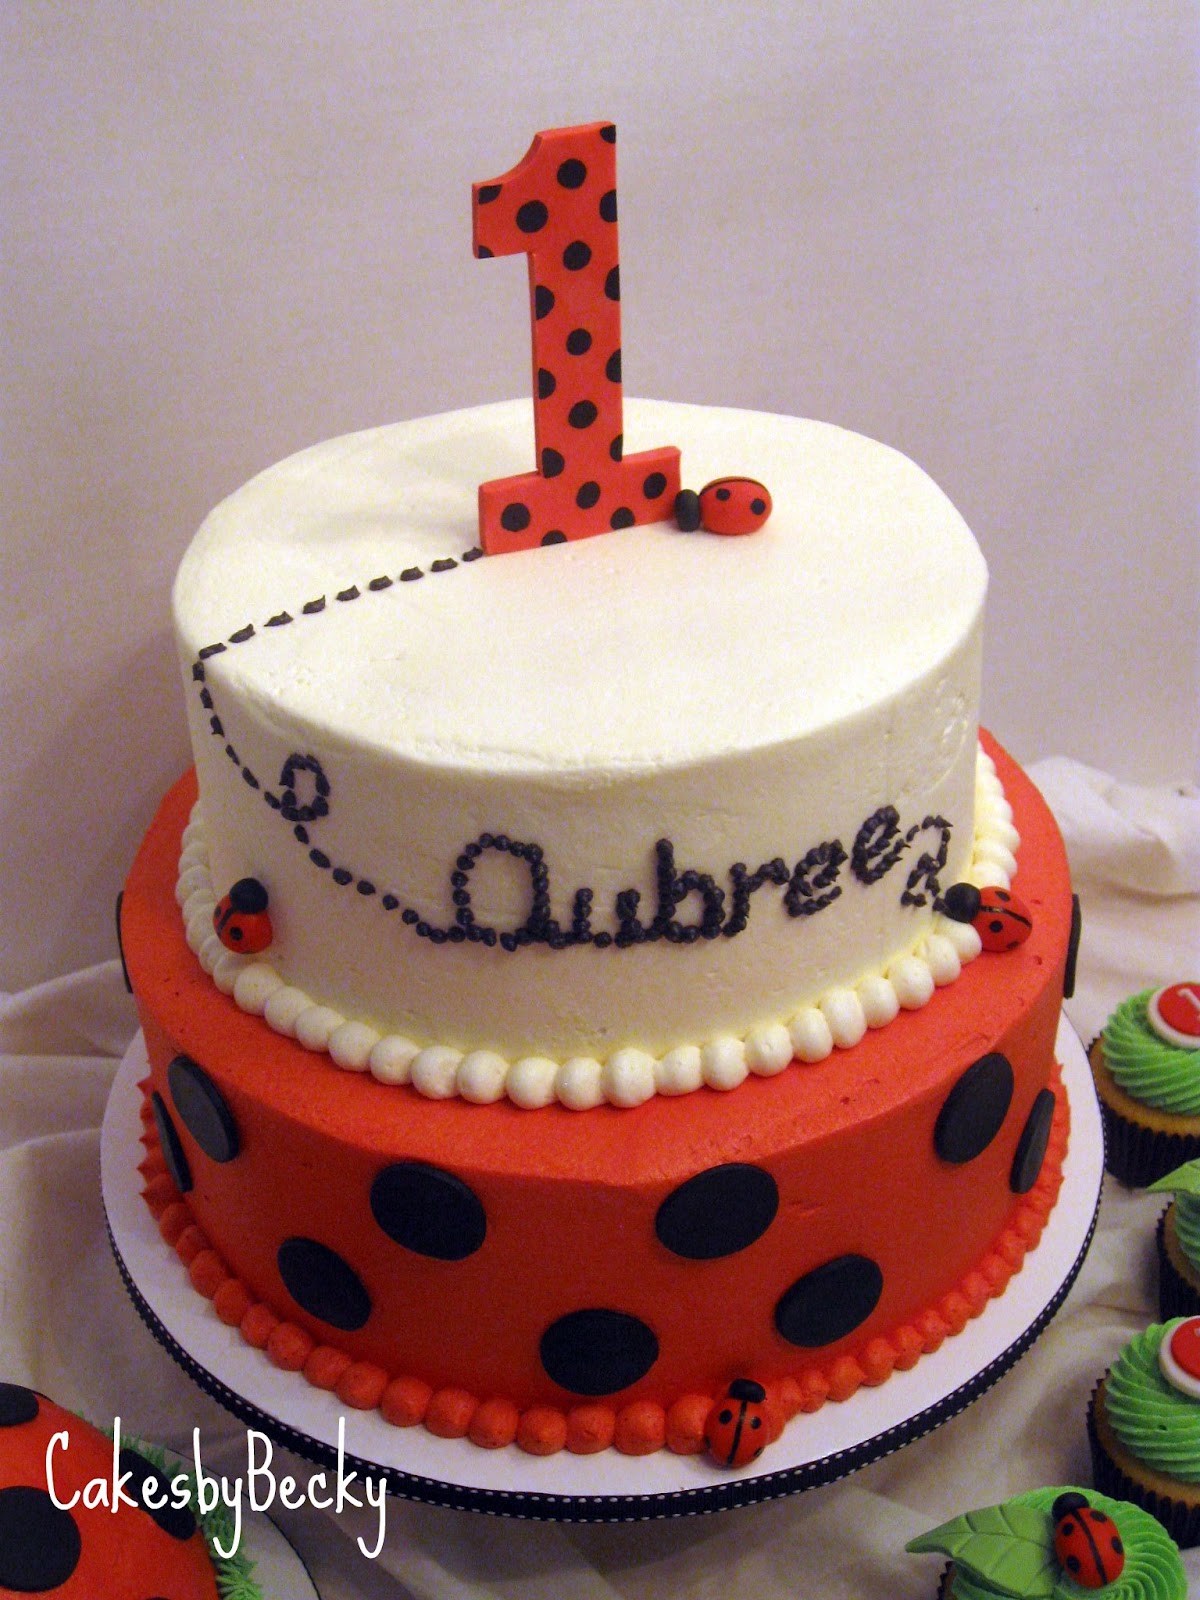 Ladybug First Birthday Cake